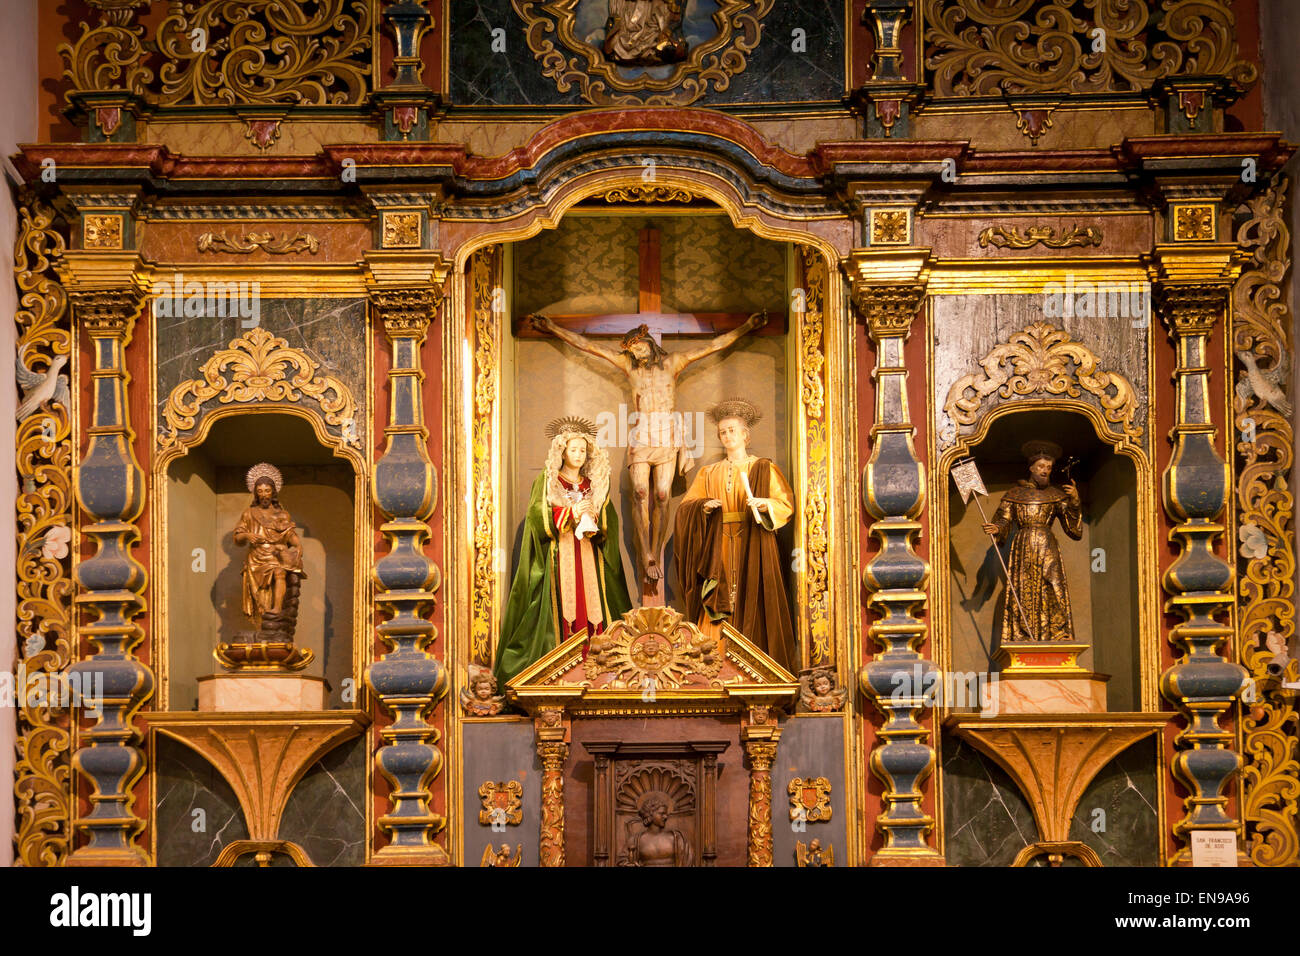 interior of the chapel Ermita  San Francisco in Puerto de la Cruz, Tenerife, Canary Islands, Spain, Europe Stock Photo